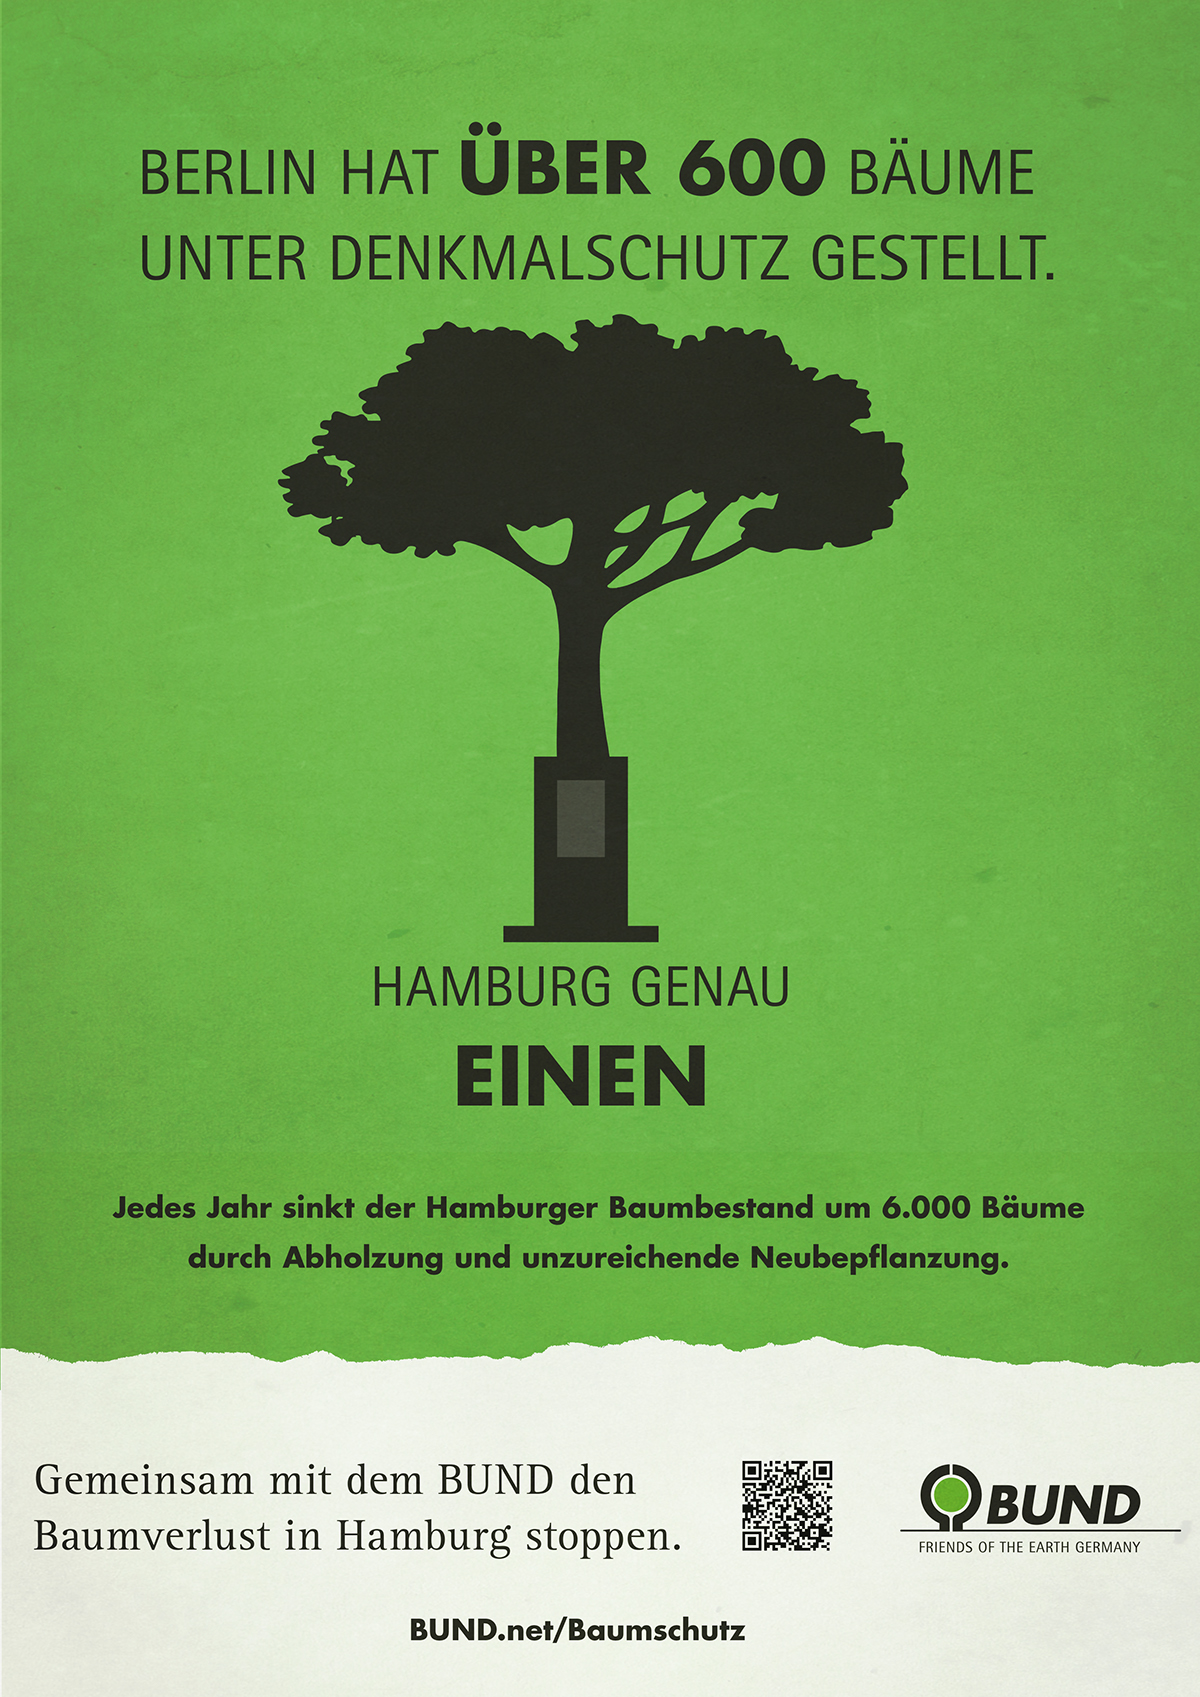 hamburg baum Baumschutz NGO social marketing